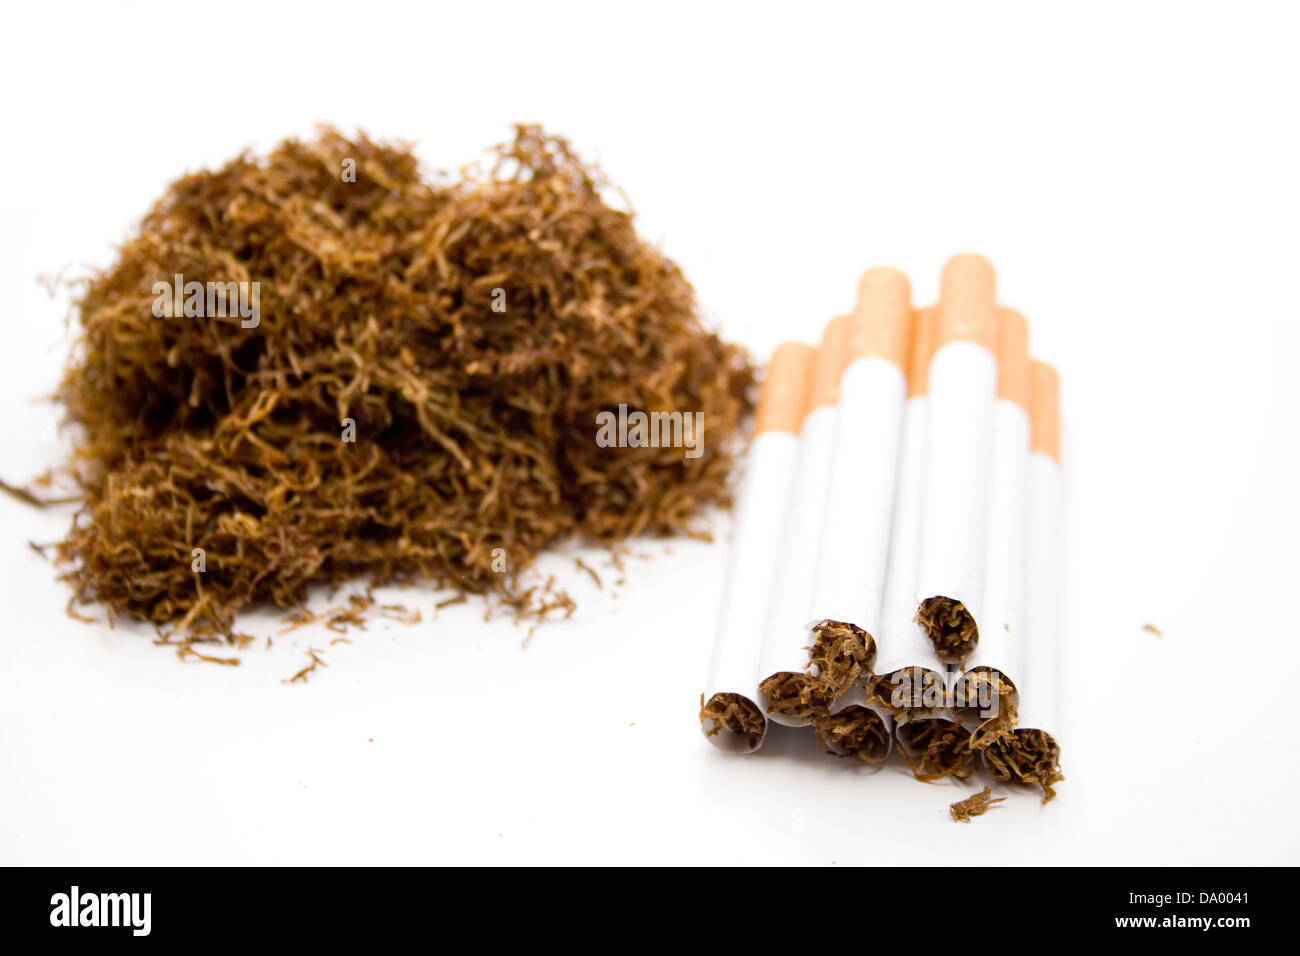 Tobacco with cigarettes Stock Photo